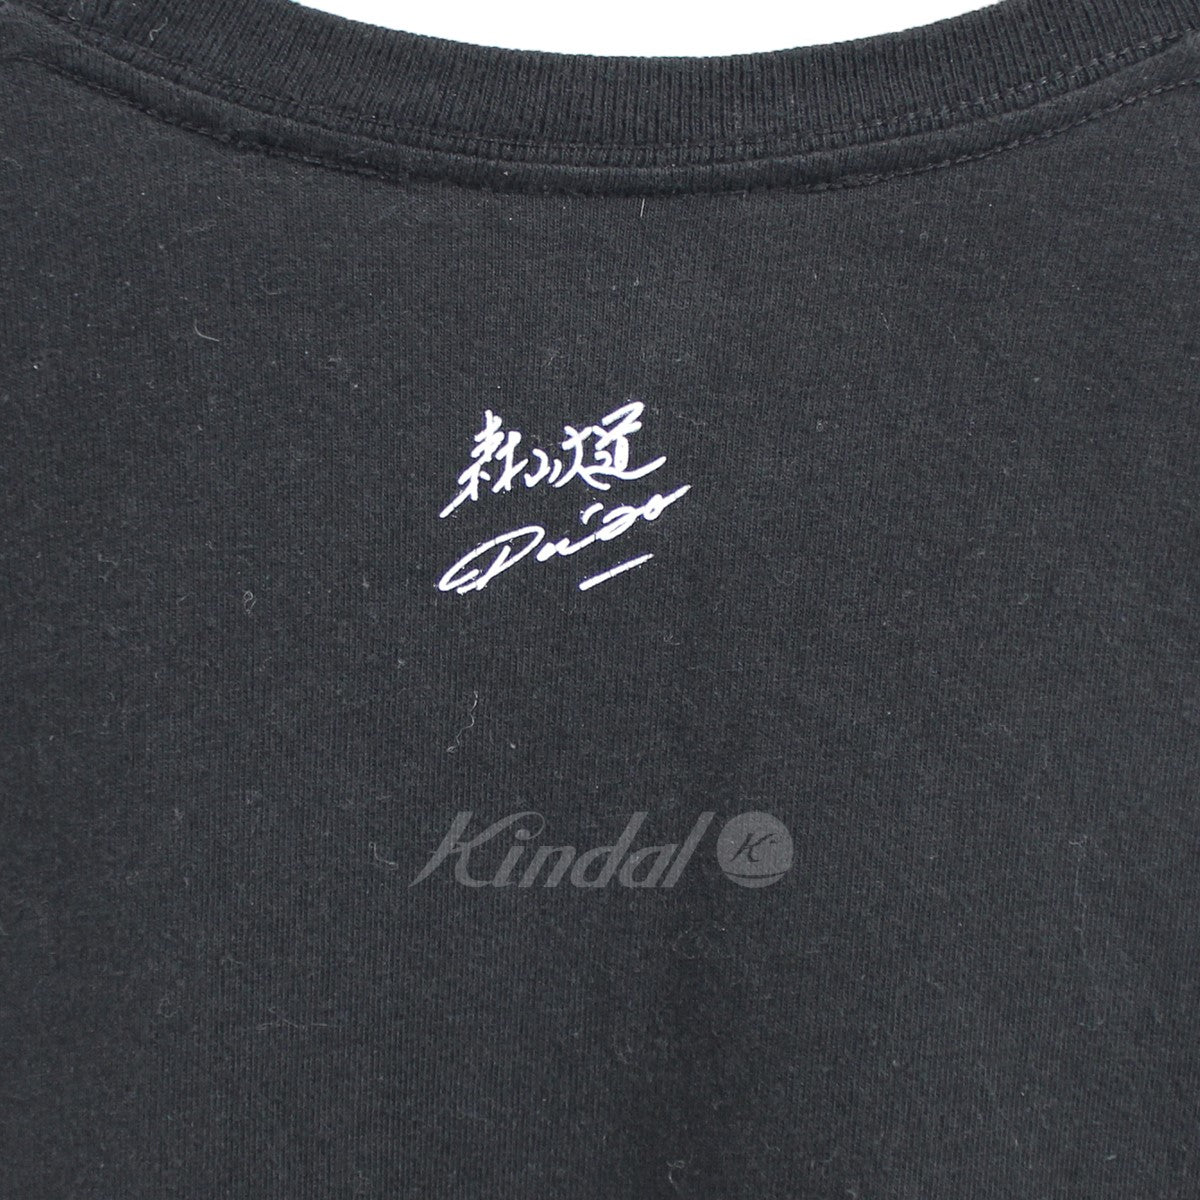 22SS Daido Moriyama Tights Tee 森山大道 タイツ ロゴ Tシャツ